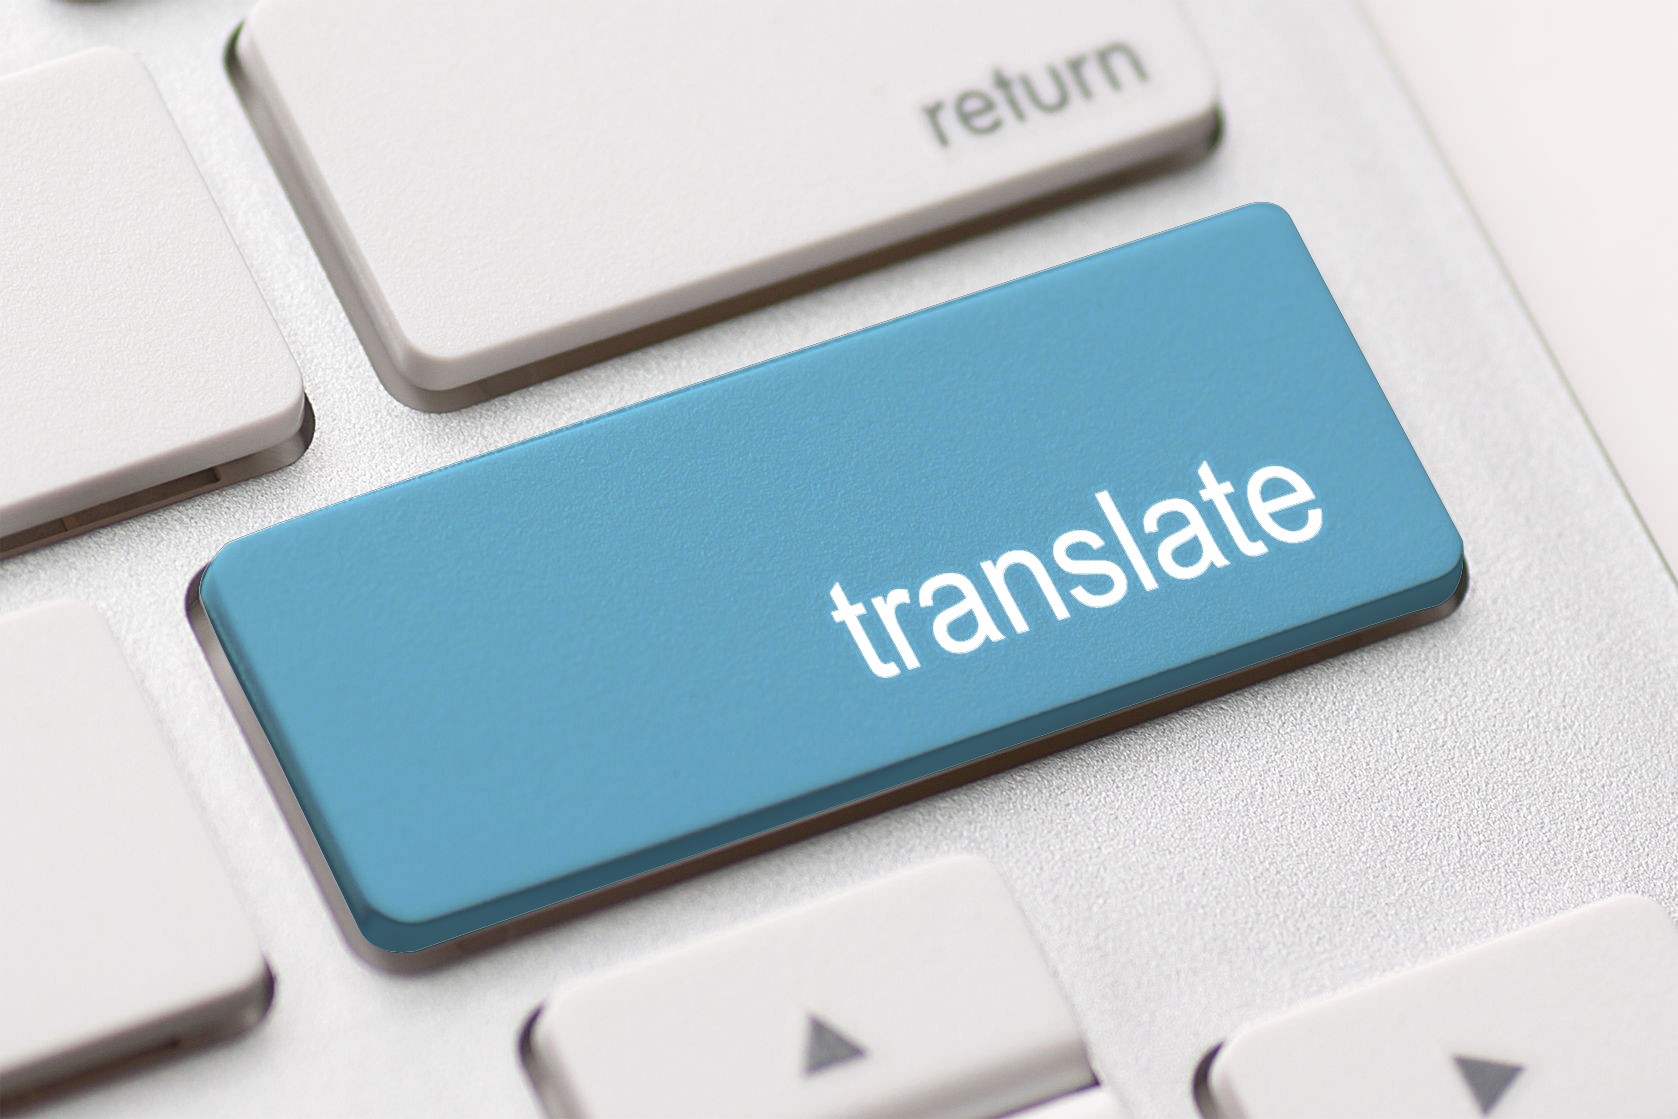 Auto Translate